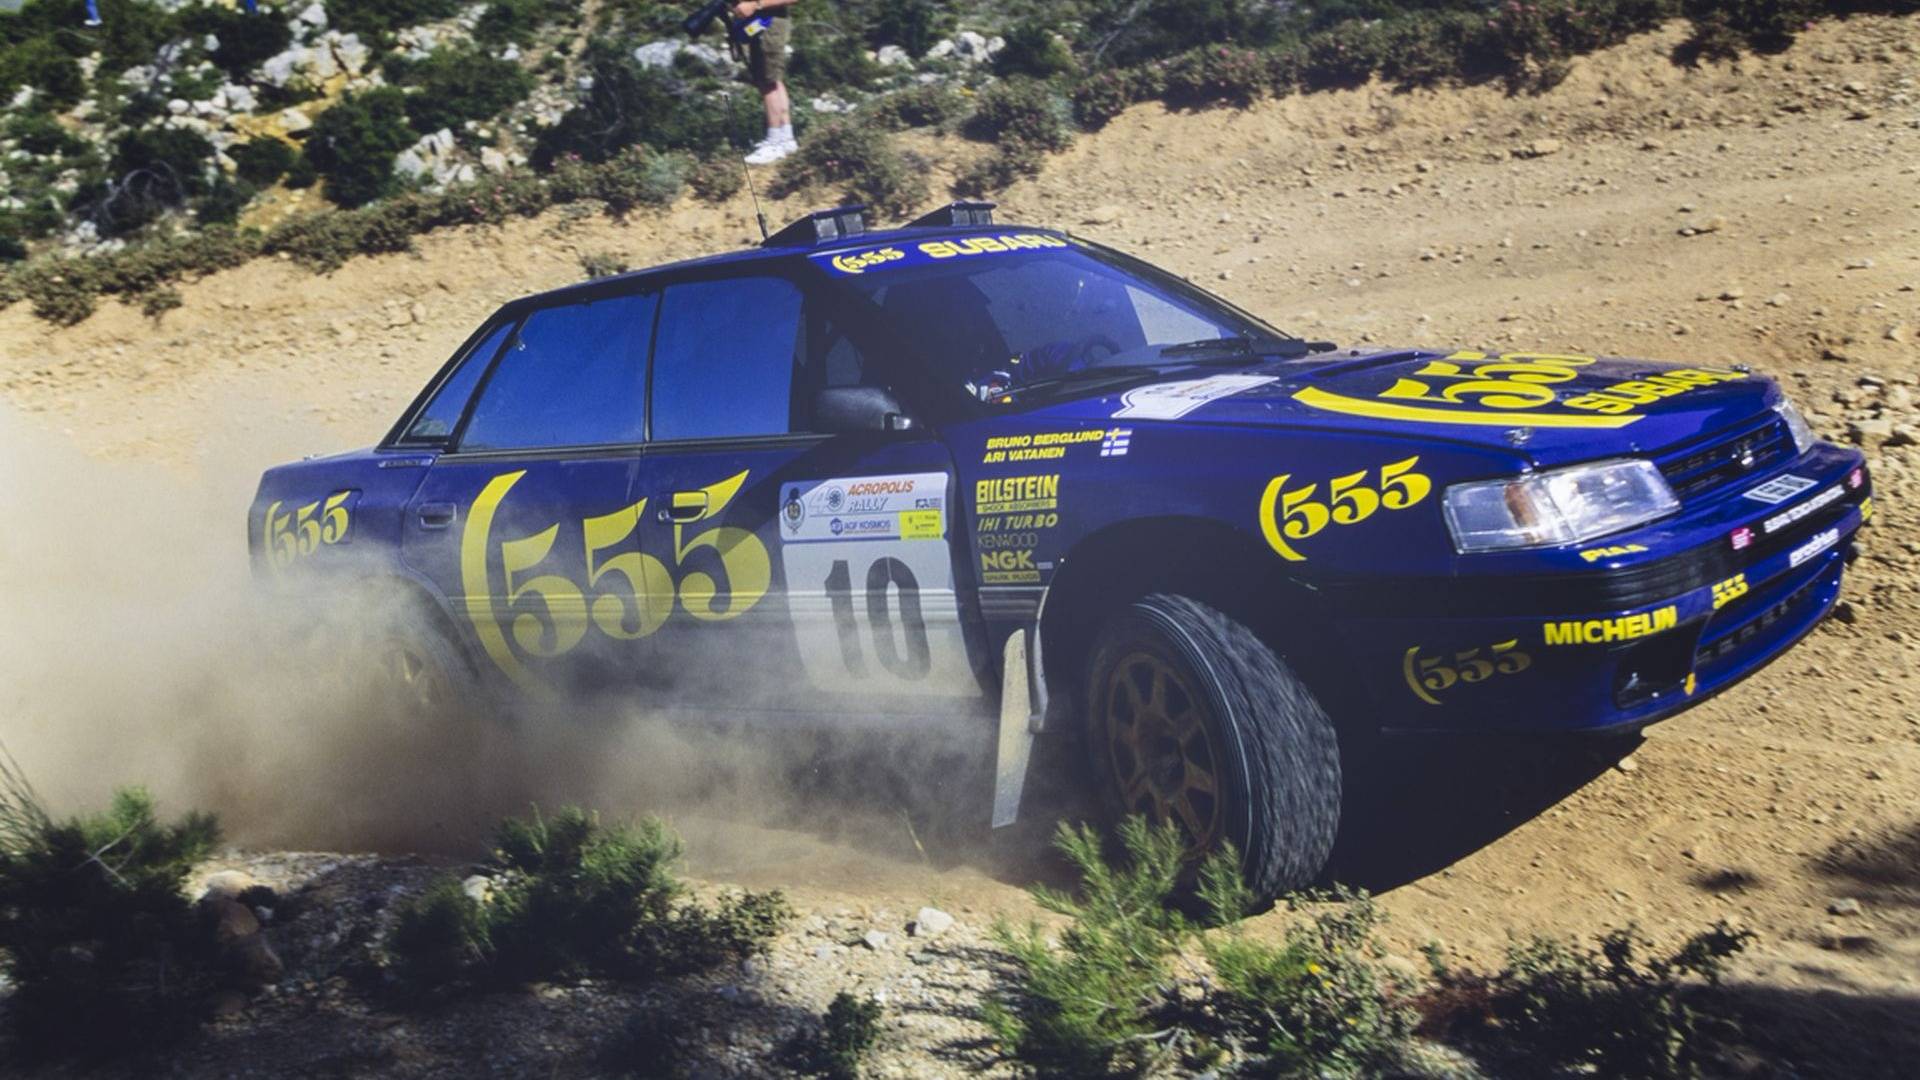 Subaru Performance in Rallies